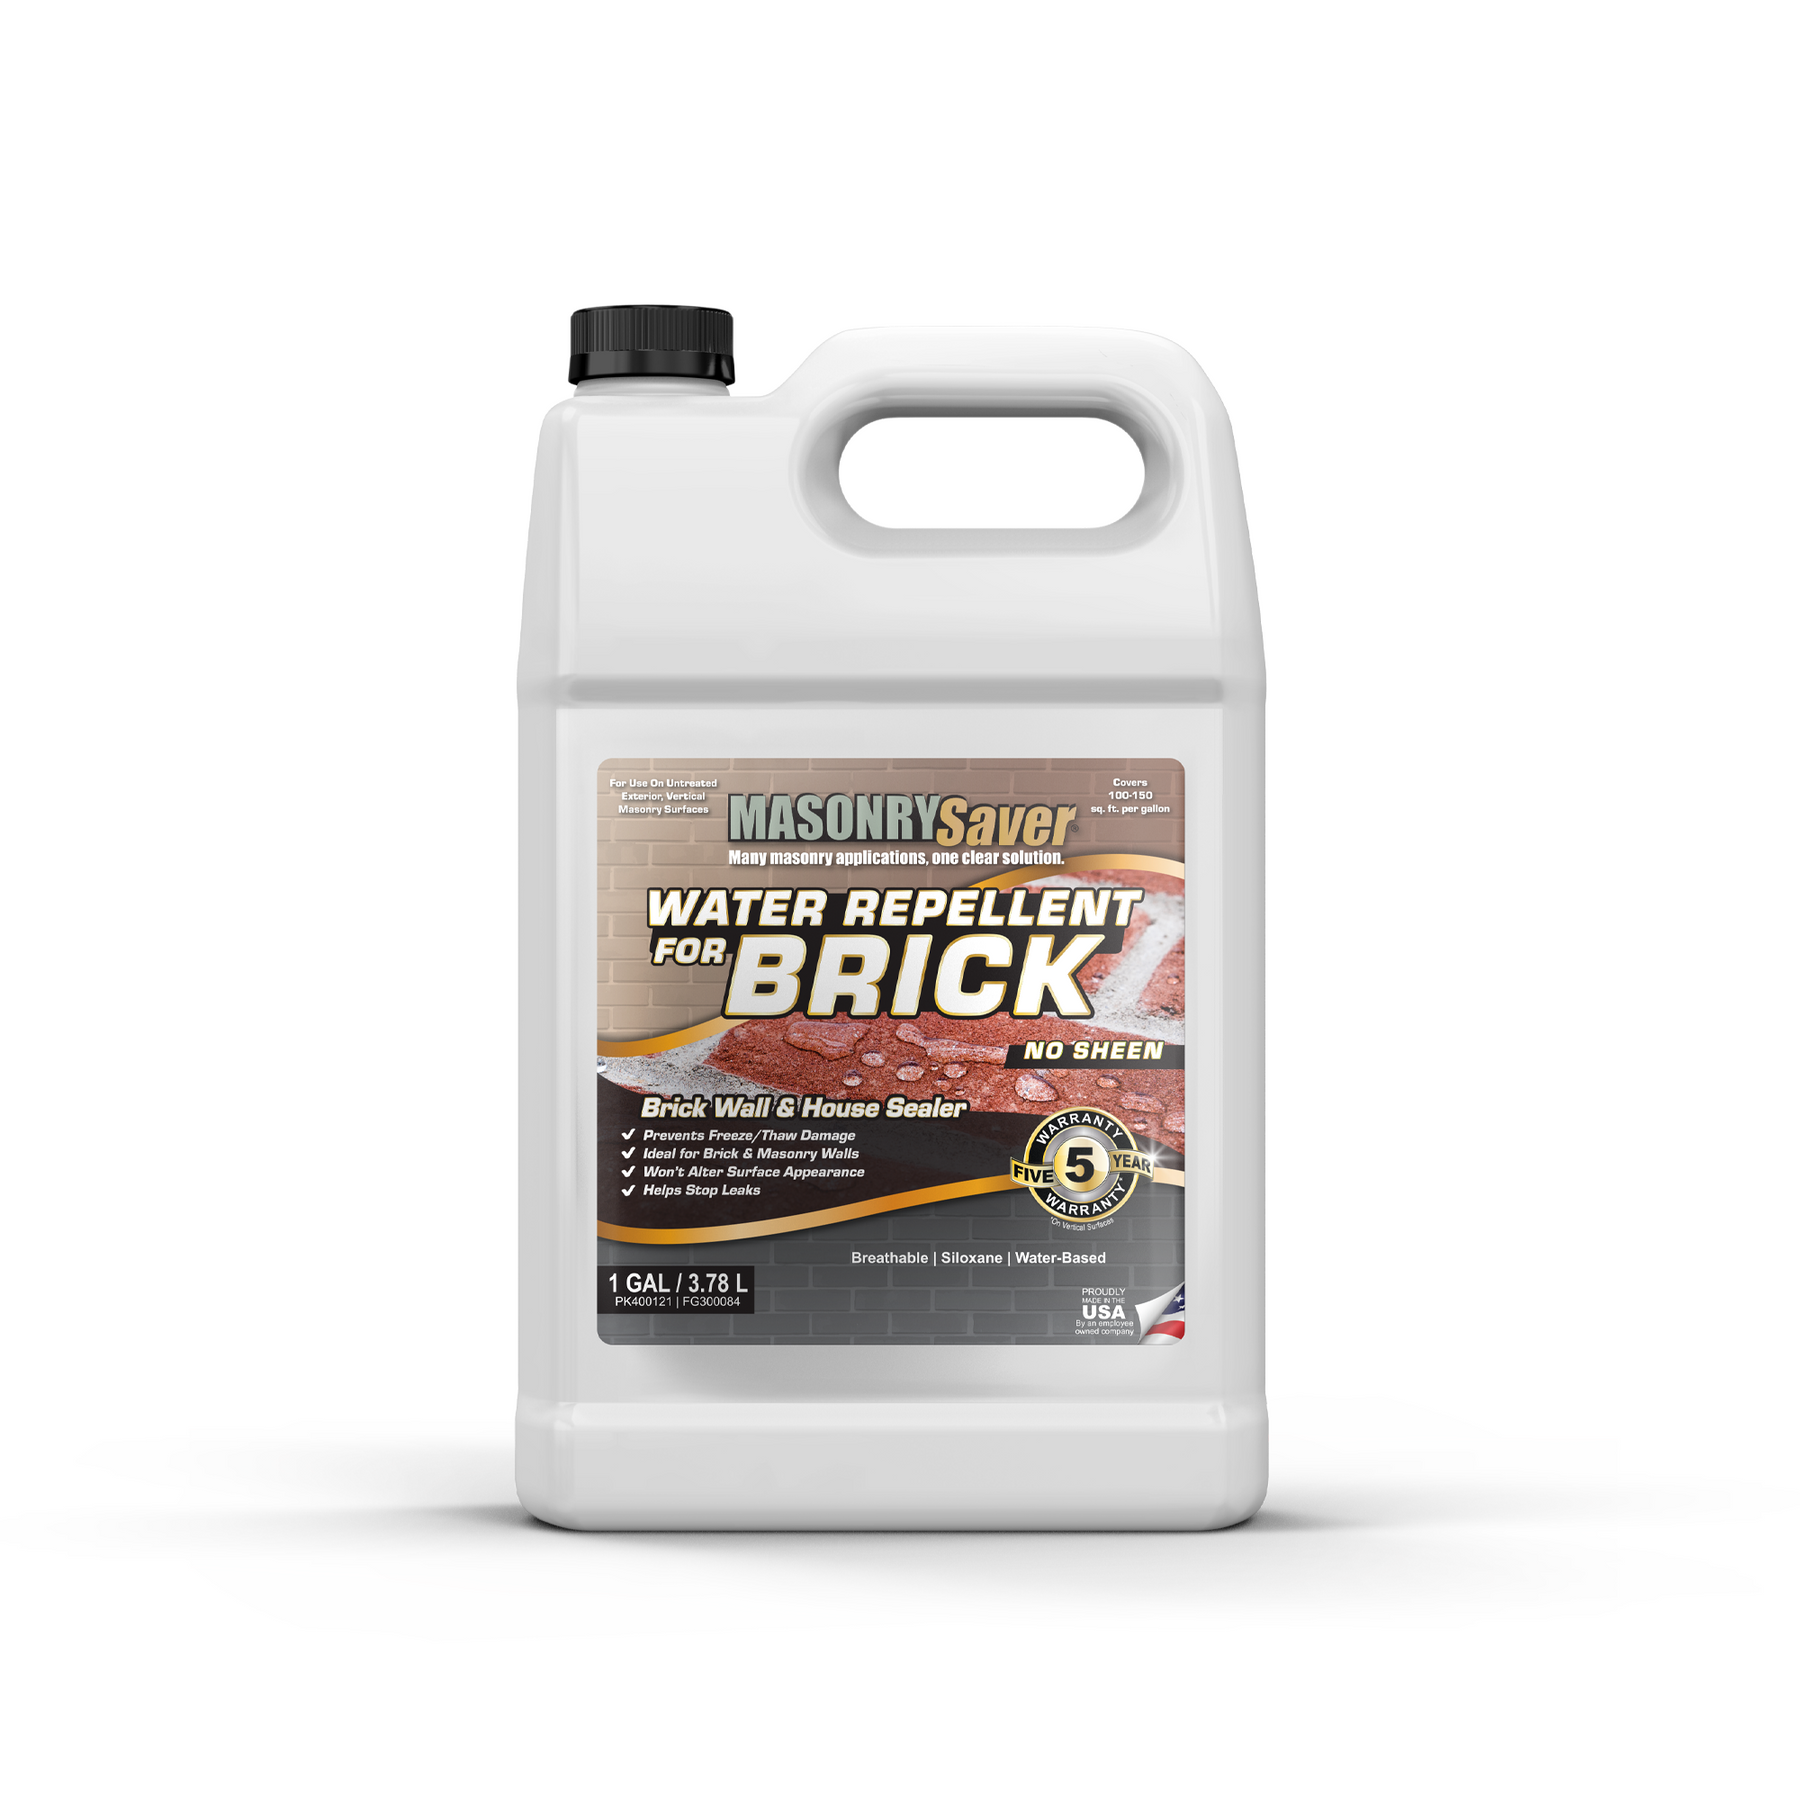 Water Repellent for Brick